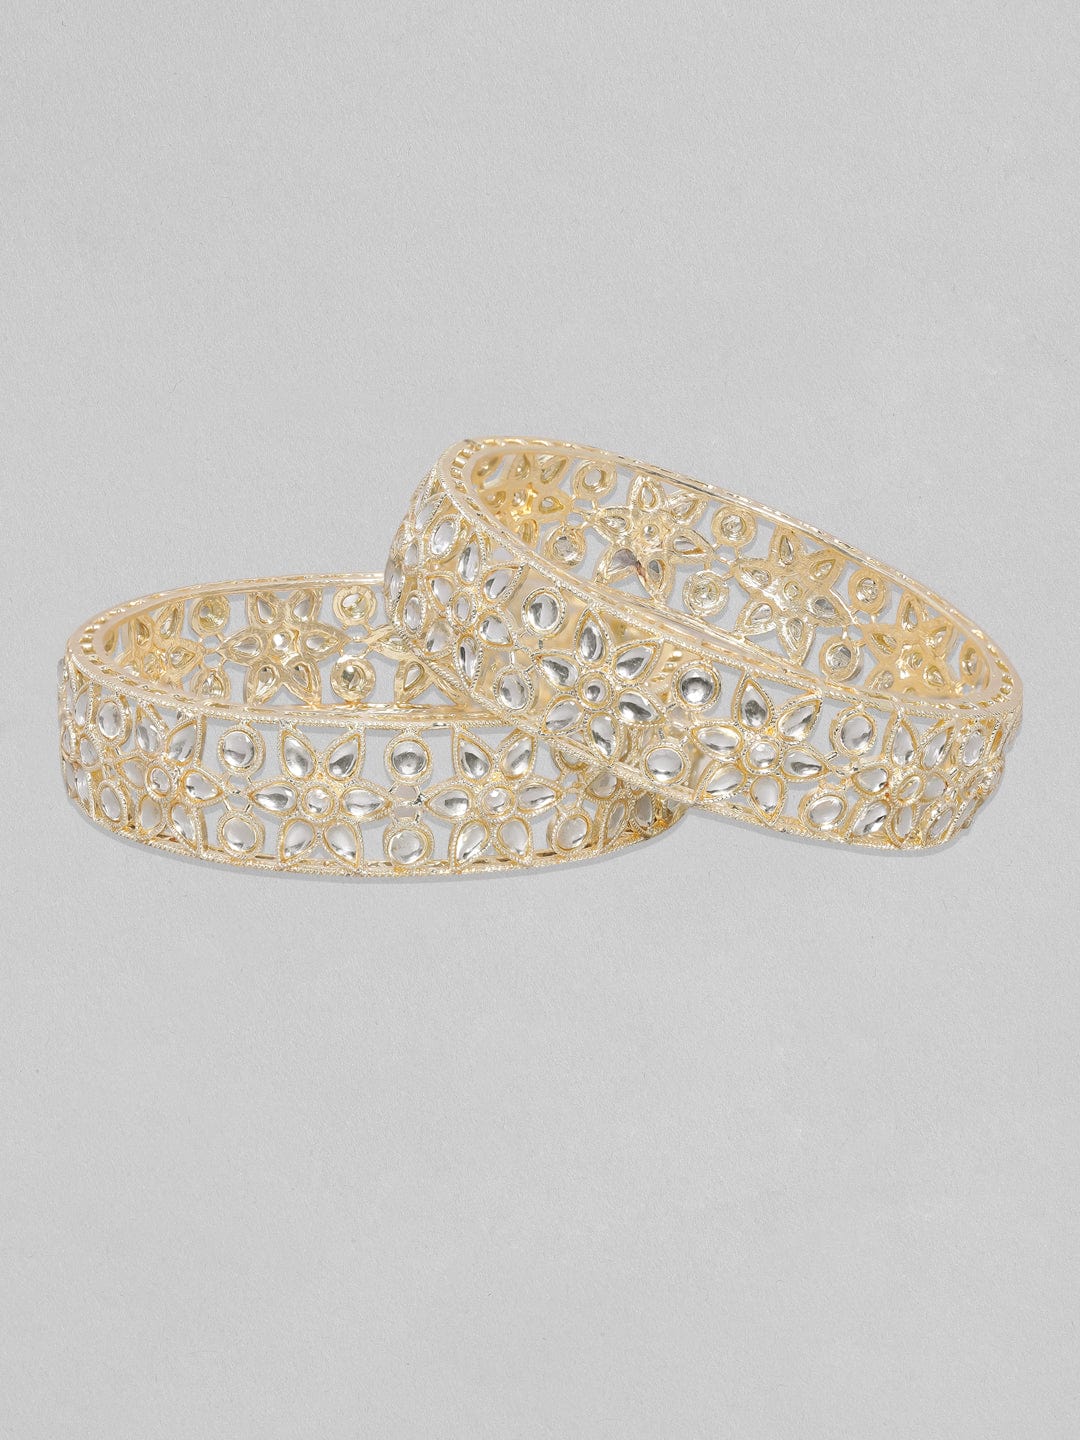 14K Gold Diamond Bracelet 67275: buy online in NYC. Best price at TRAXNYC.